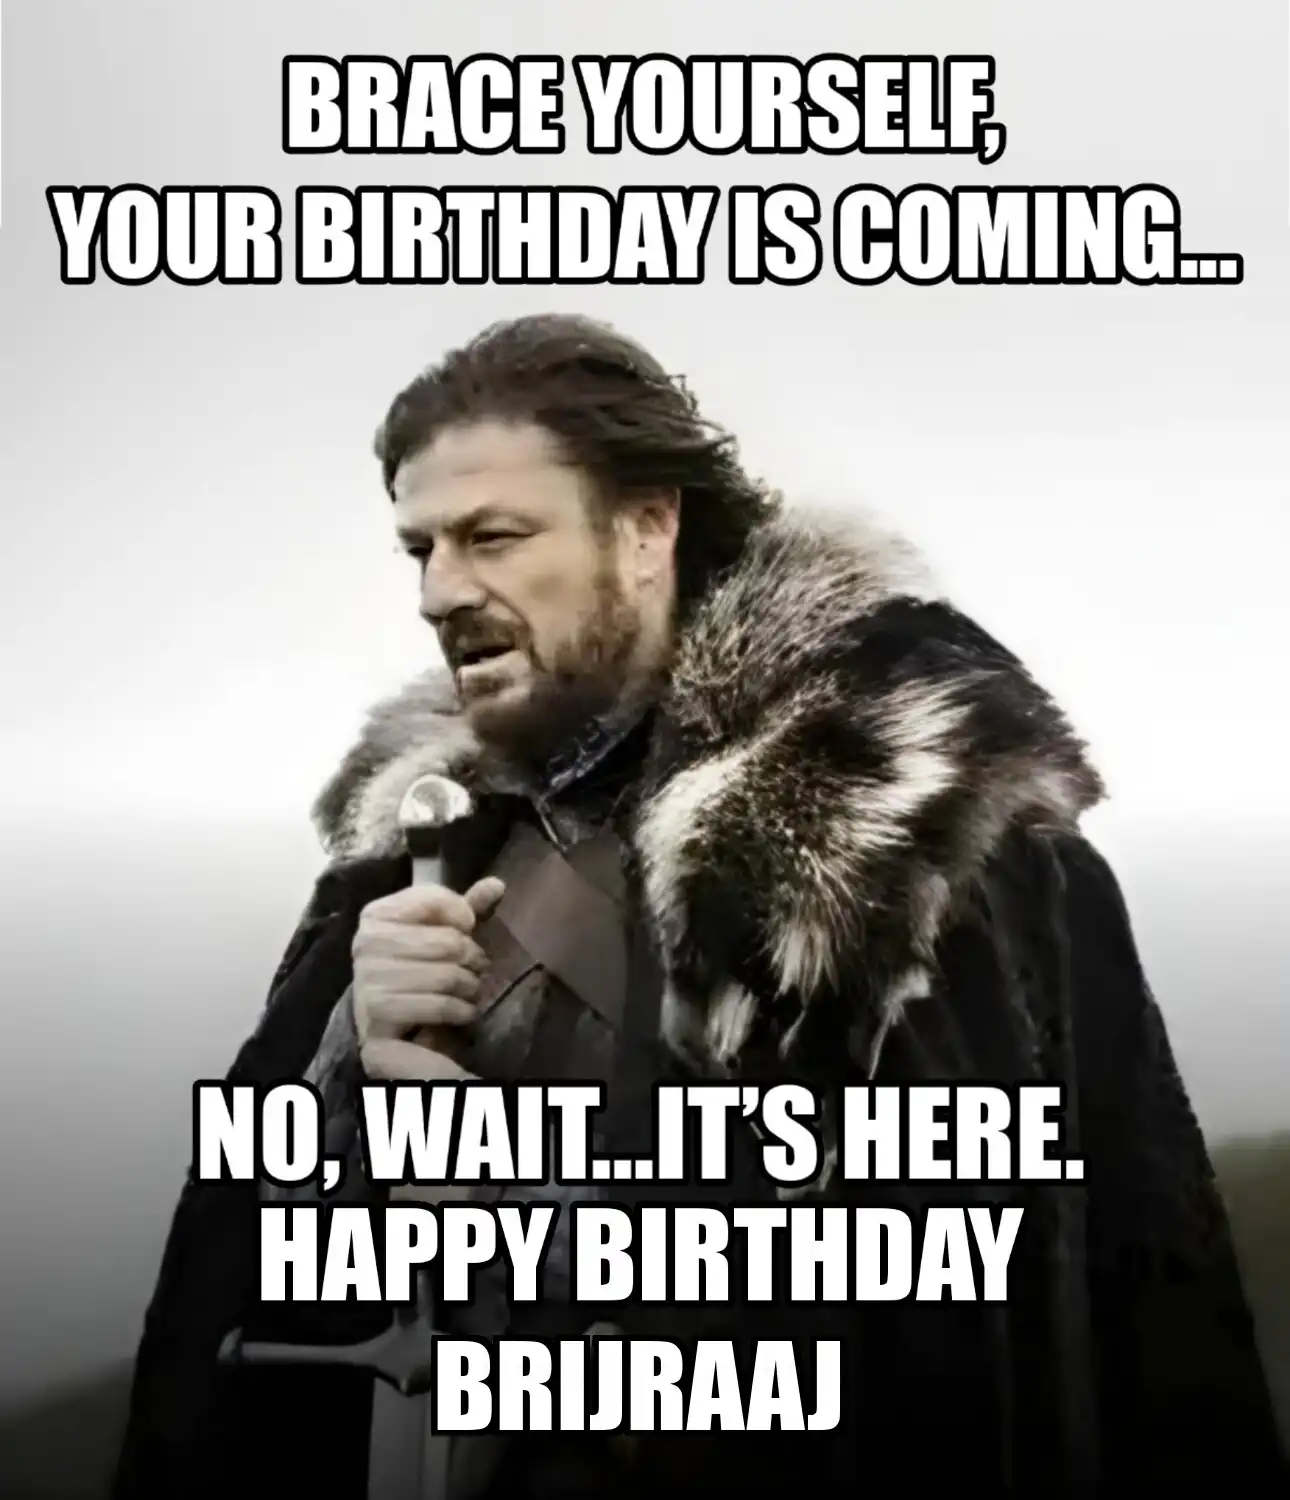 Happy Birthday Brijraaj Brace Yourself Your Birthday Is Coming Meme